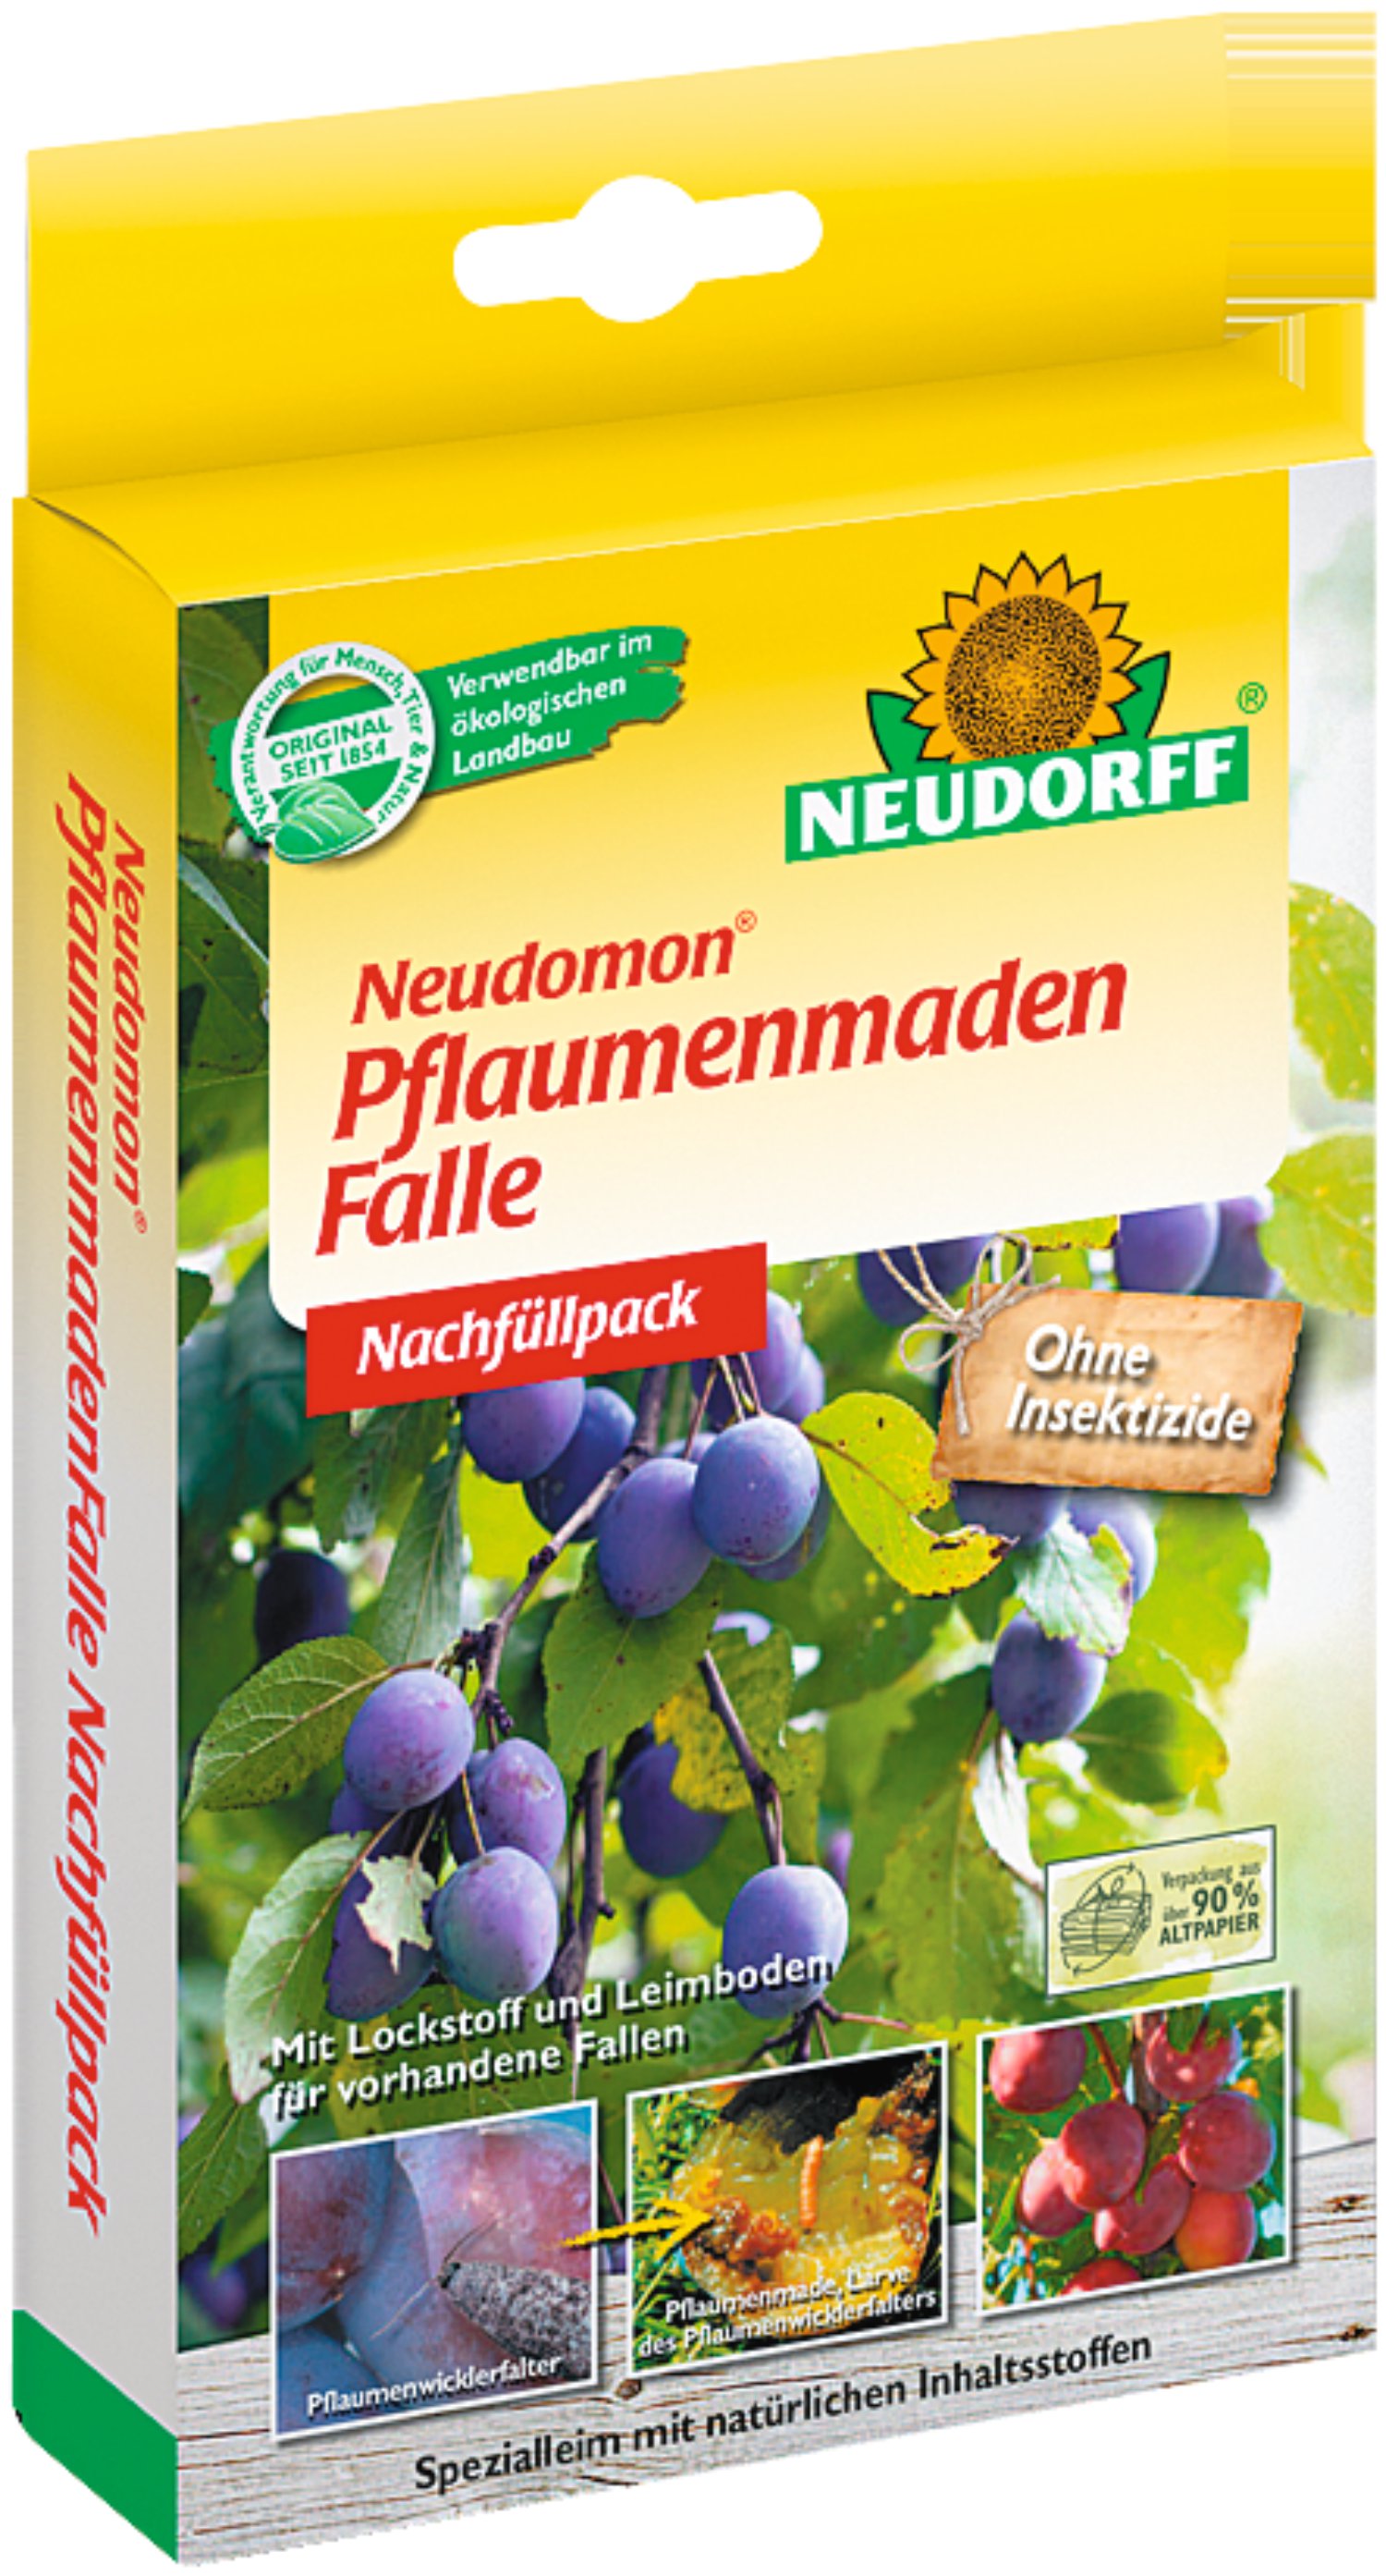 NEUDORFF® Neudomon PflaumenmadenFalle - Nachfüllpack